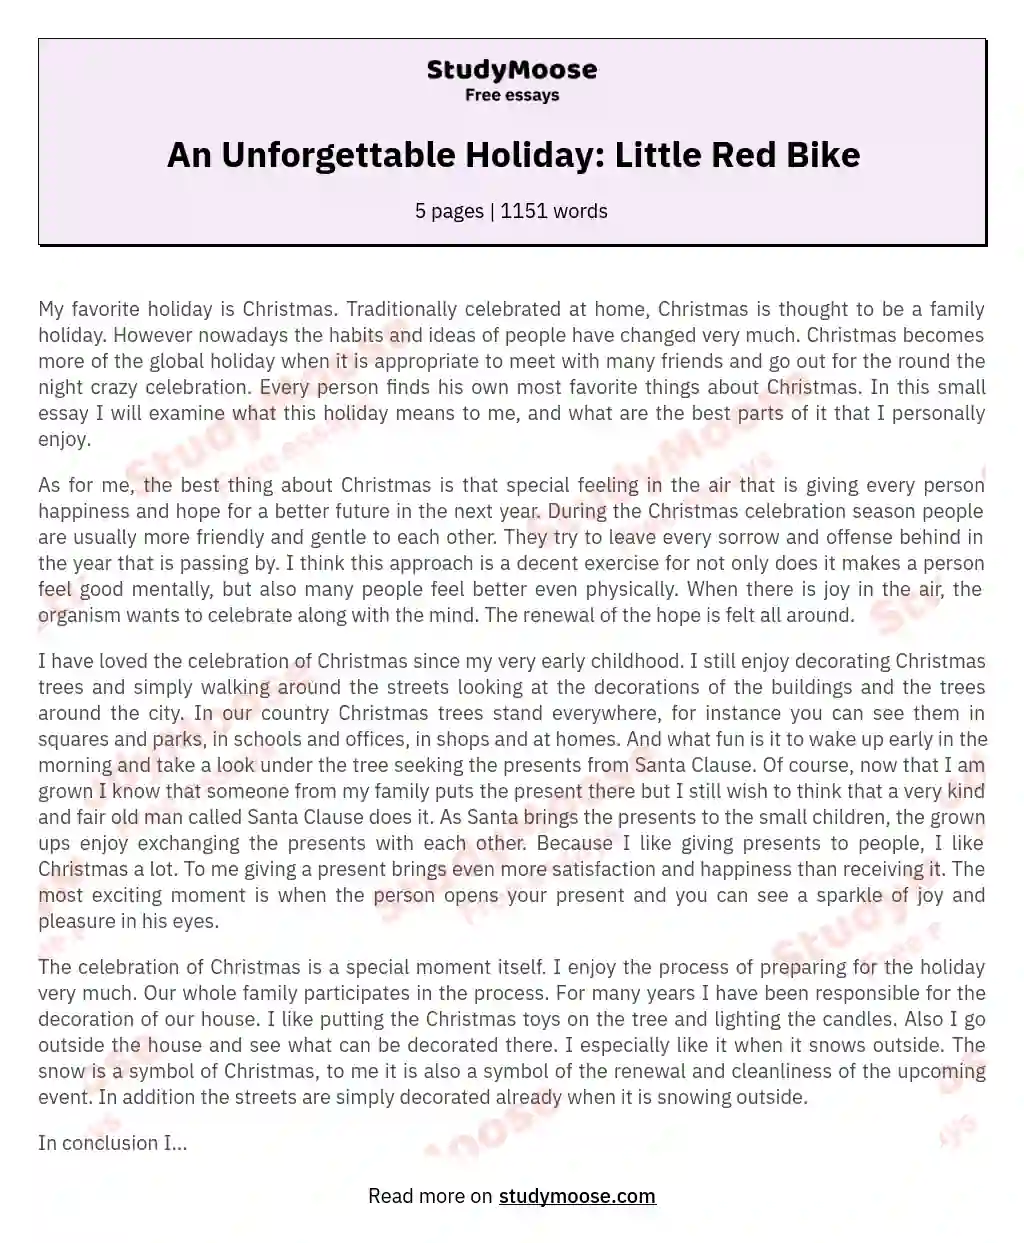 An Unforgettable Holiday: Little Red Bike essay